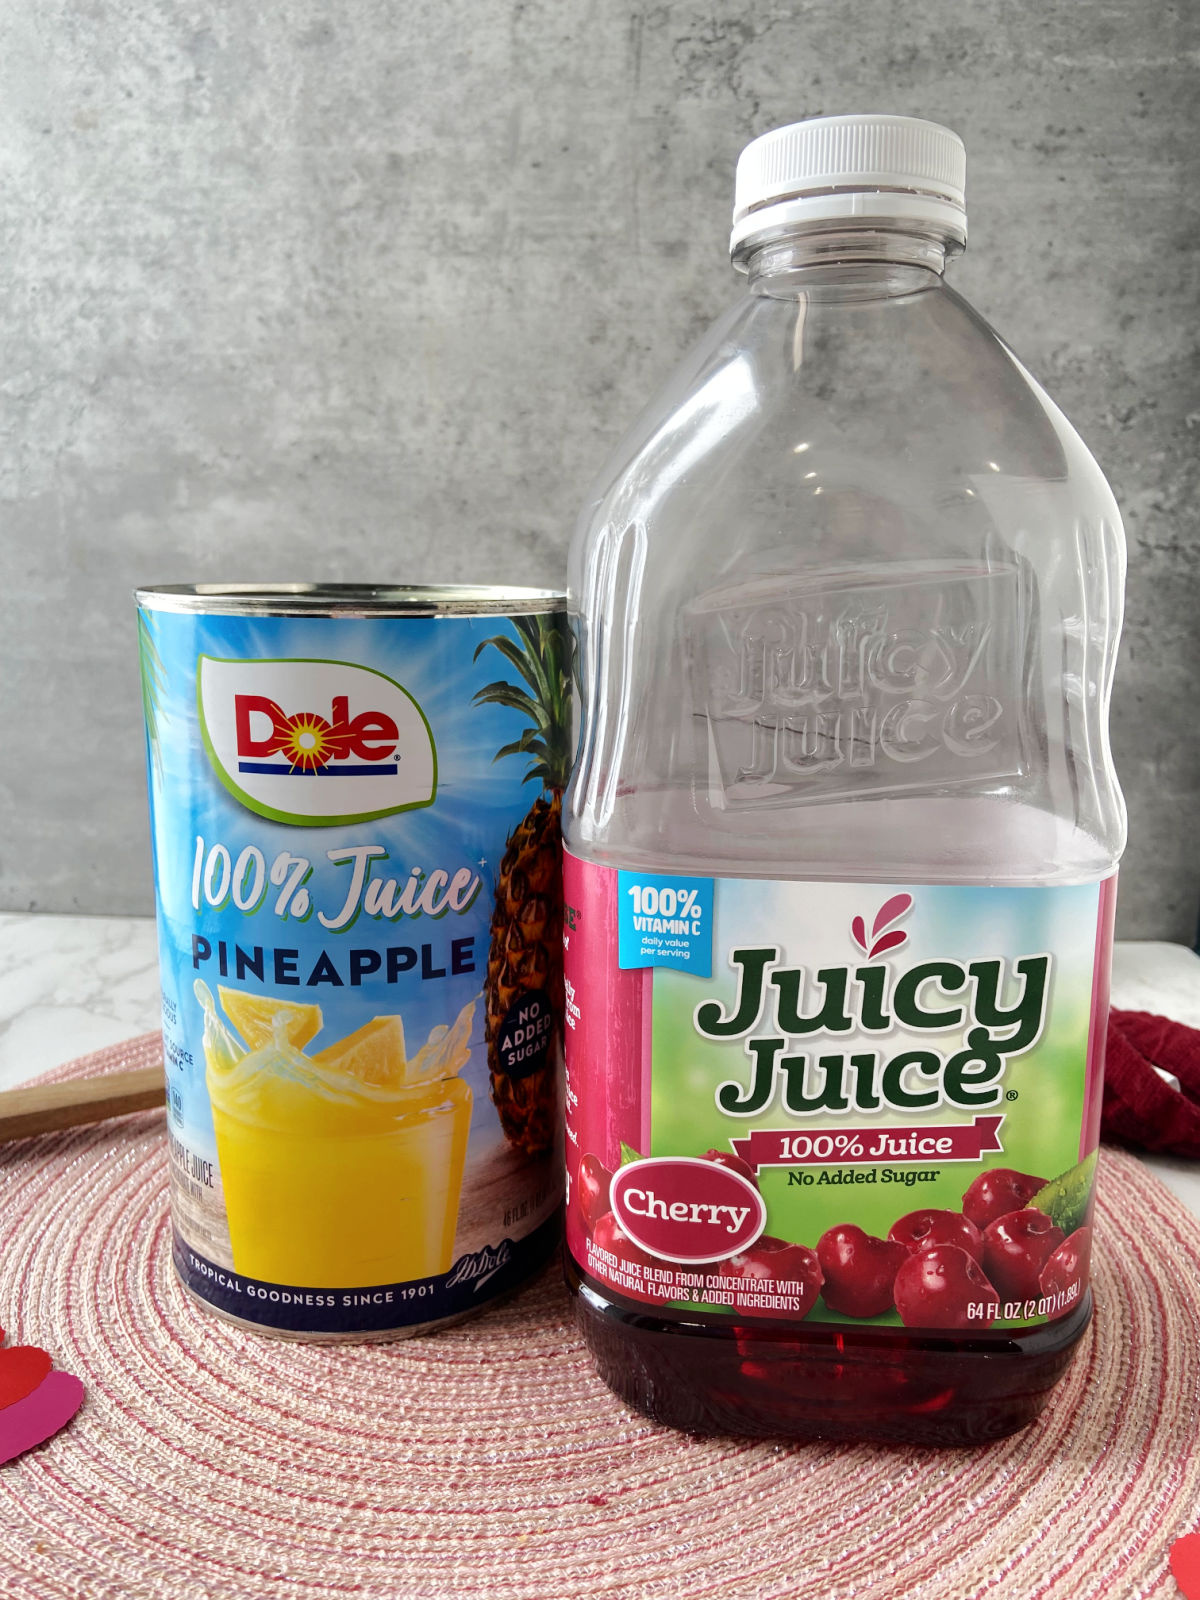 bottle of juicy juice and bottle of pineapple juice. 